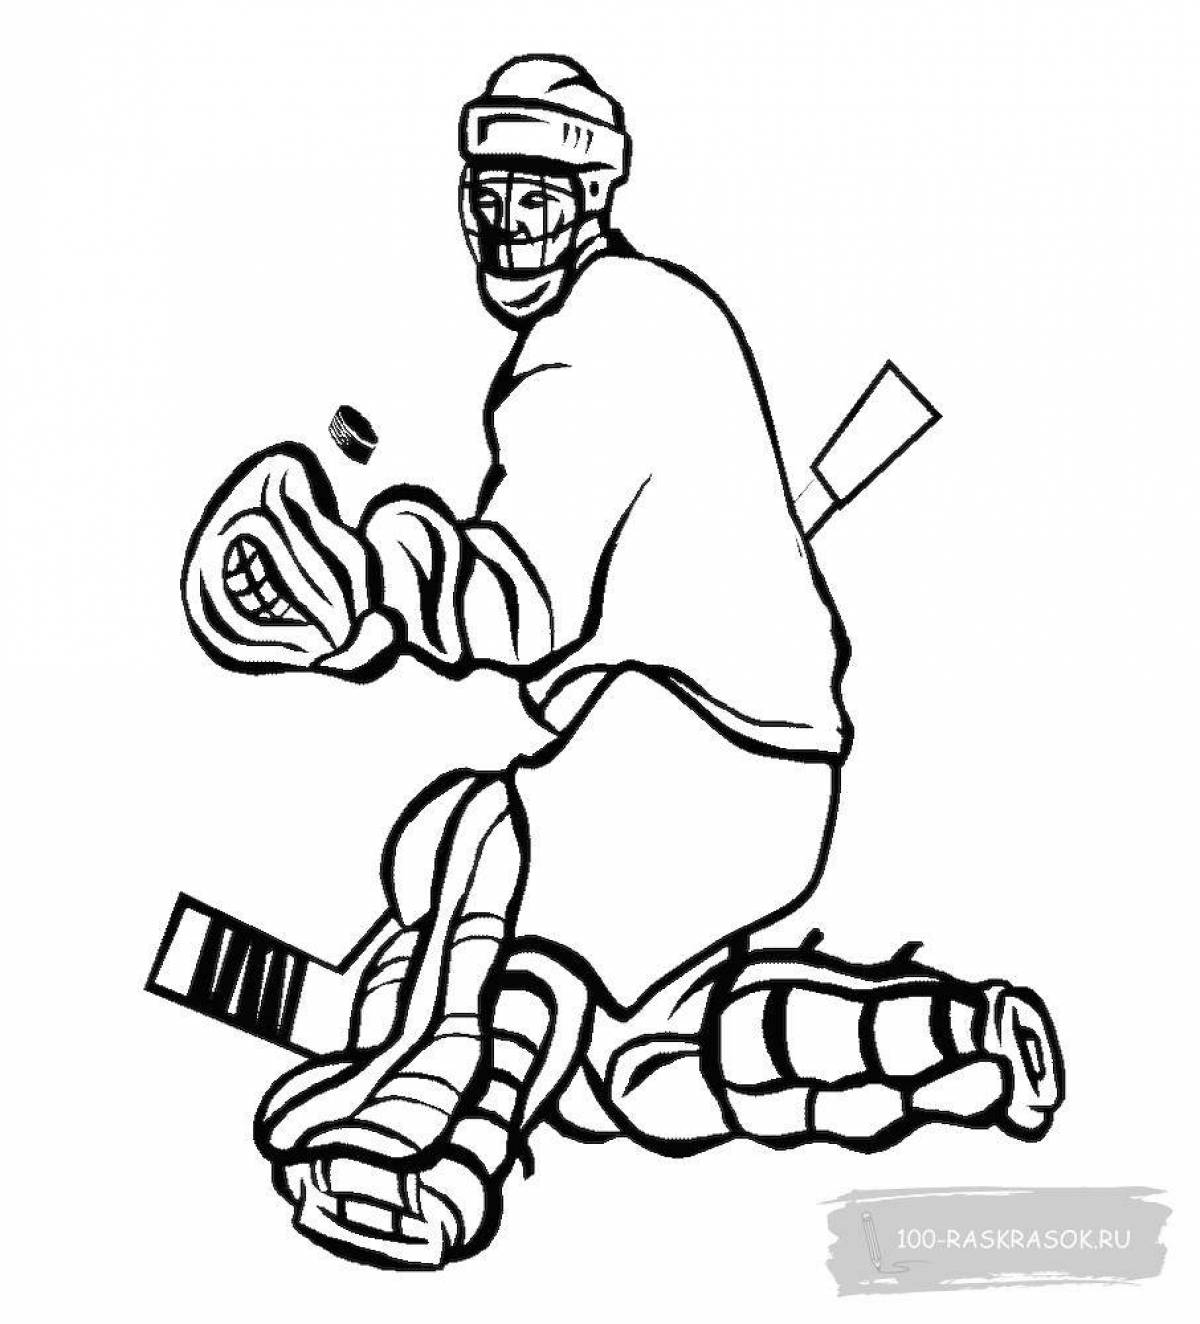 Coloring page wonderful hockey goalie